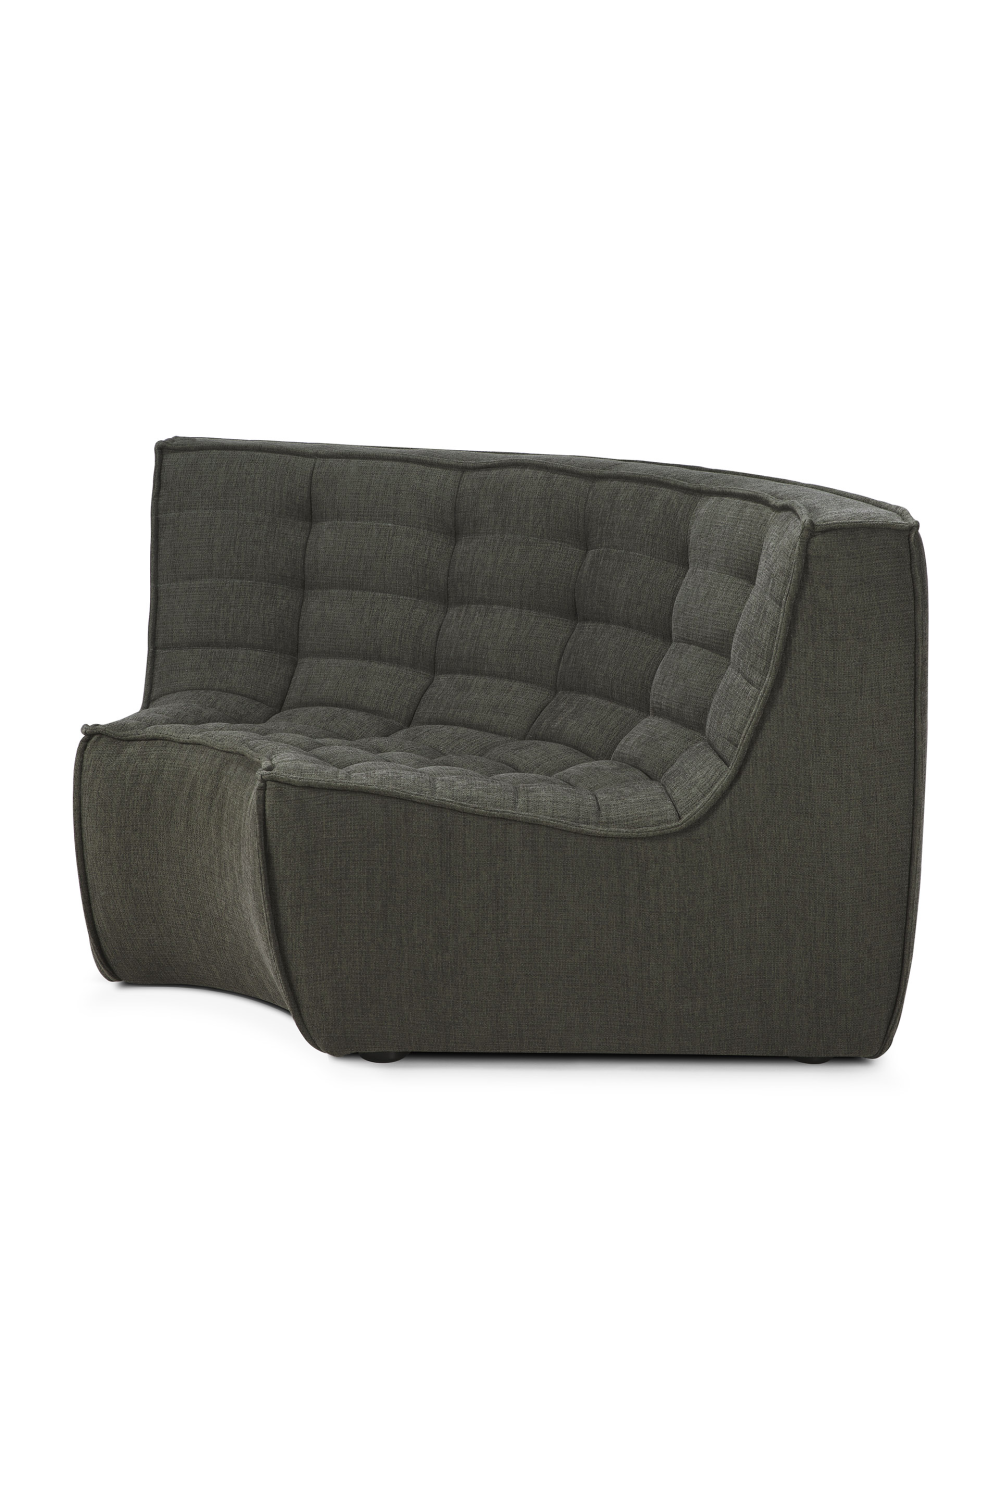 Green Modular Sofa | Ethnicraft N701 | Oroa.com